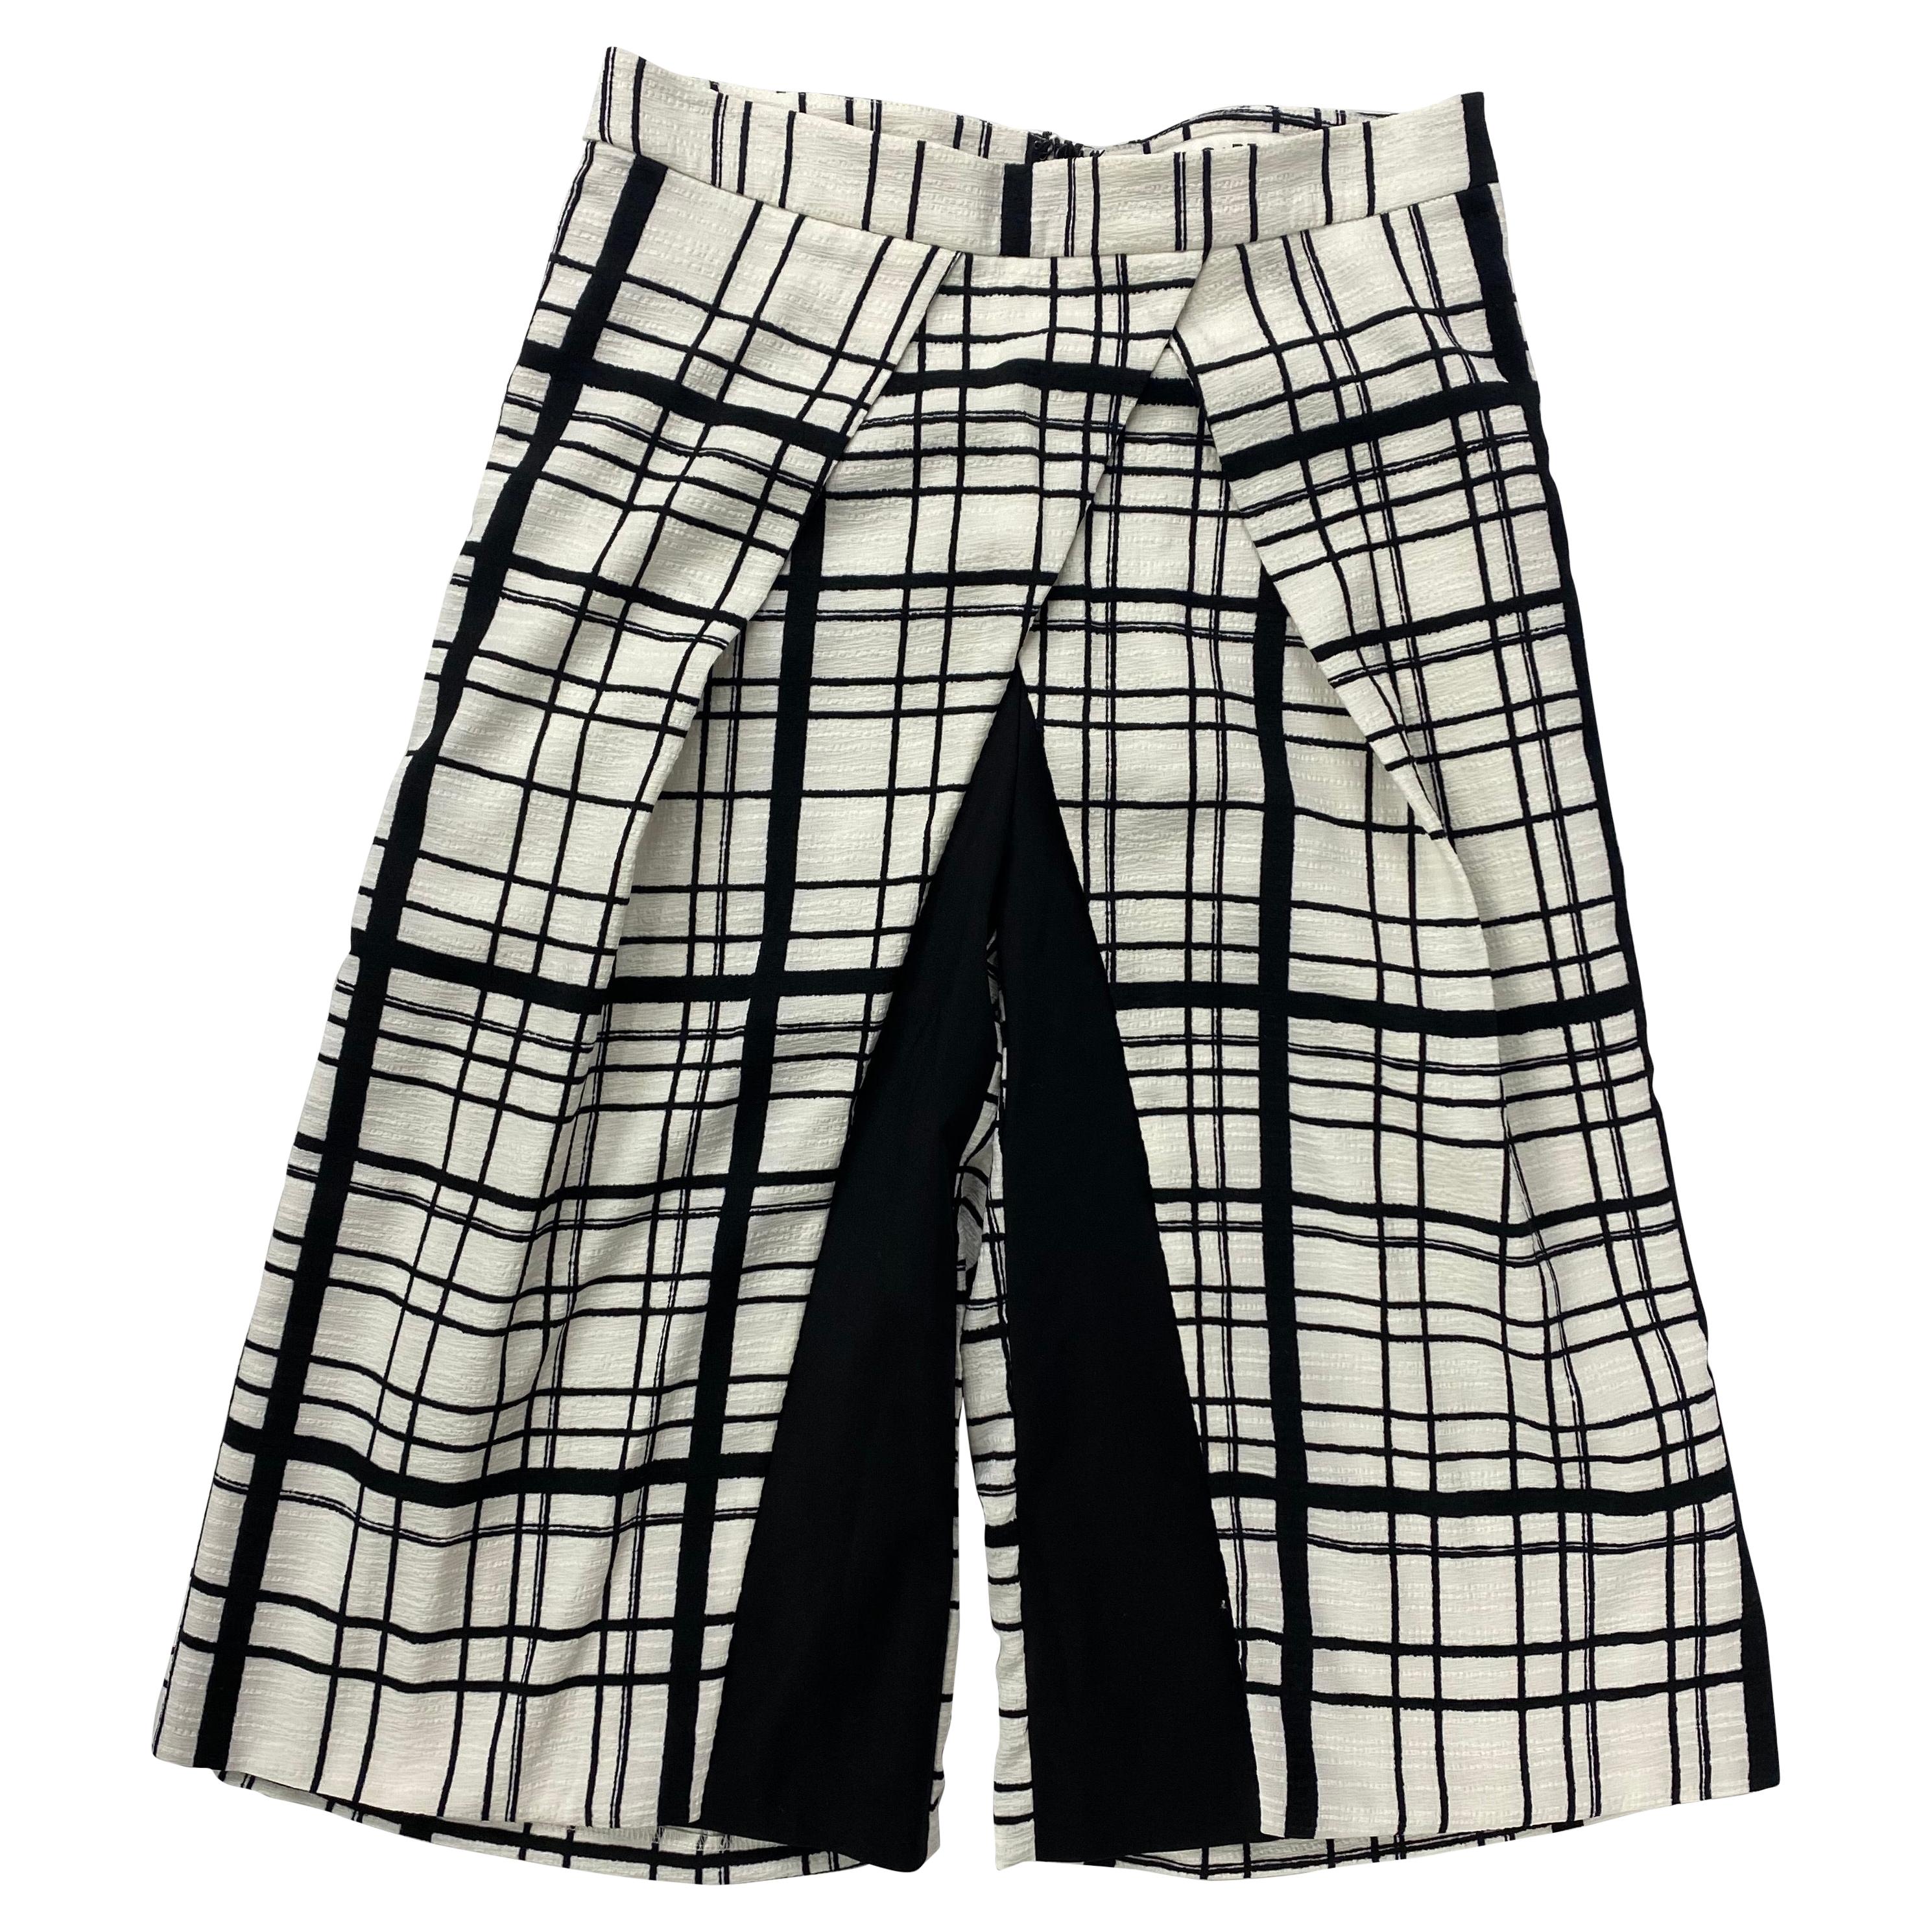 DO+BE Black and White Plaid Capri Pants, Size M For Sale